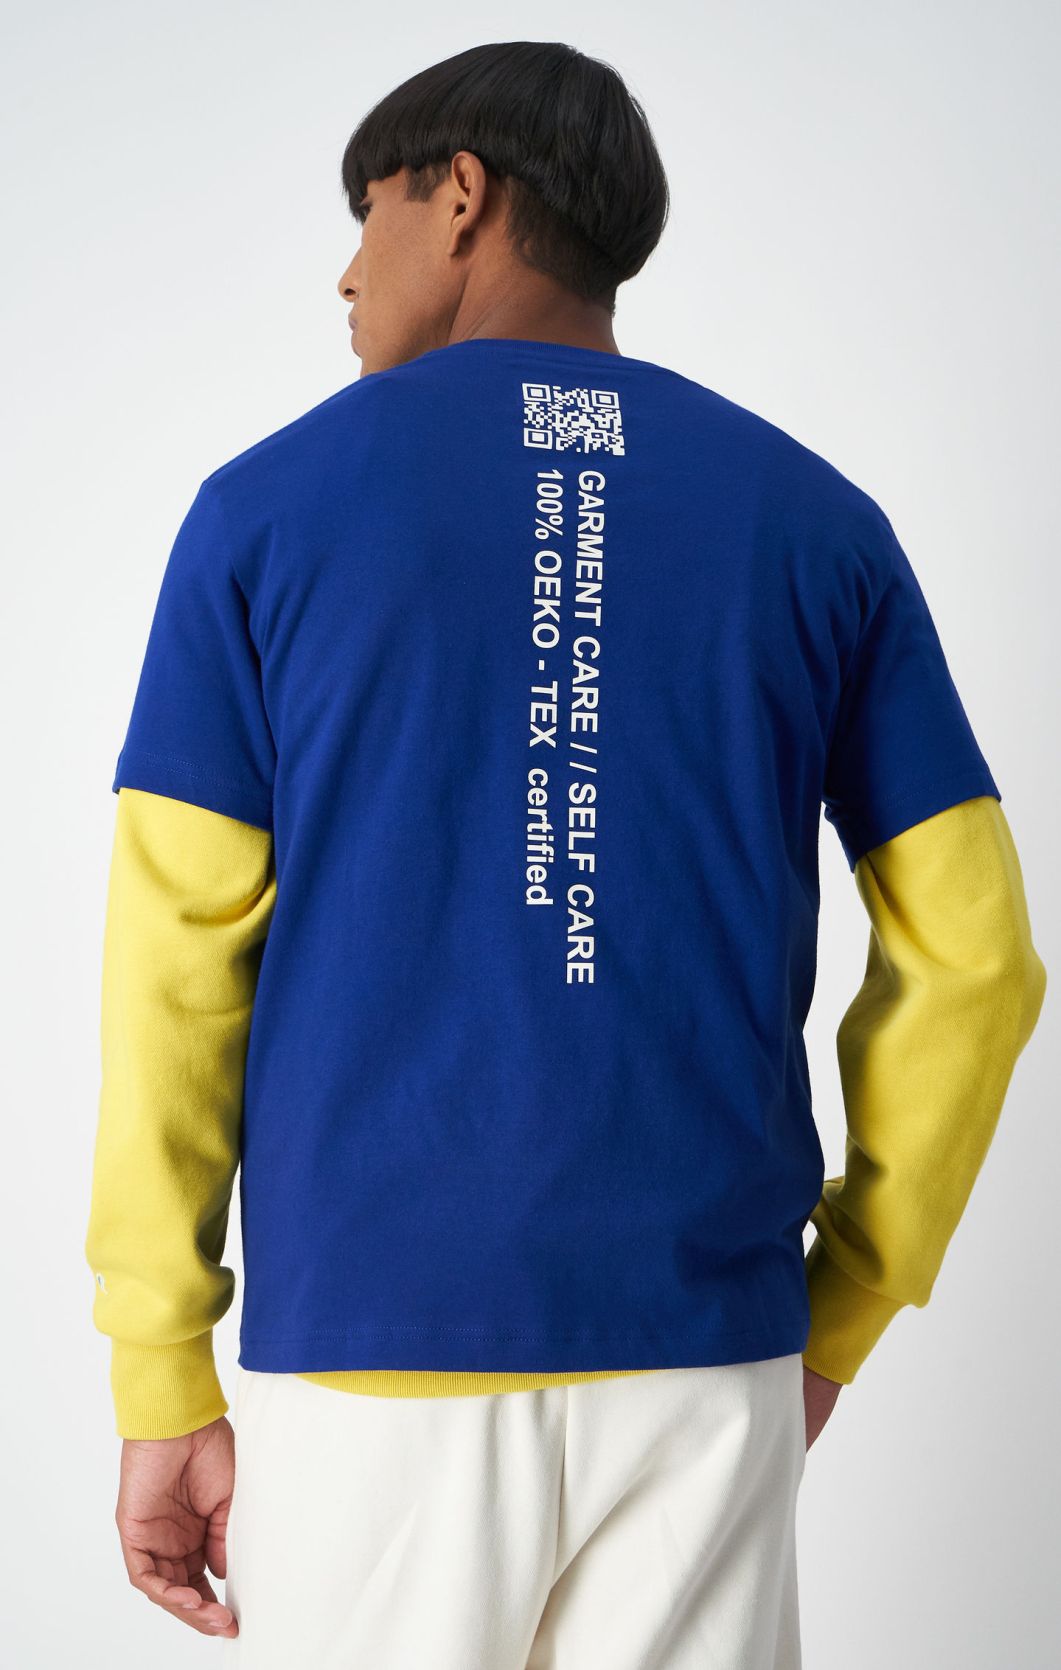 Camiseta interior mujer de algodón orgánico estampada - GOTS - Fieito